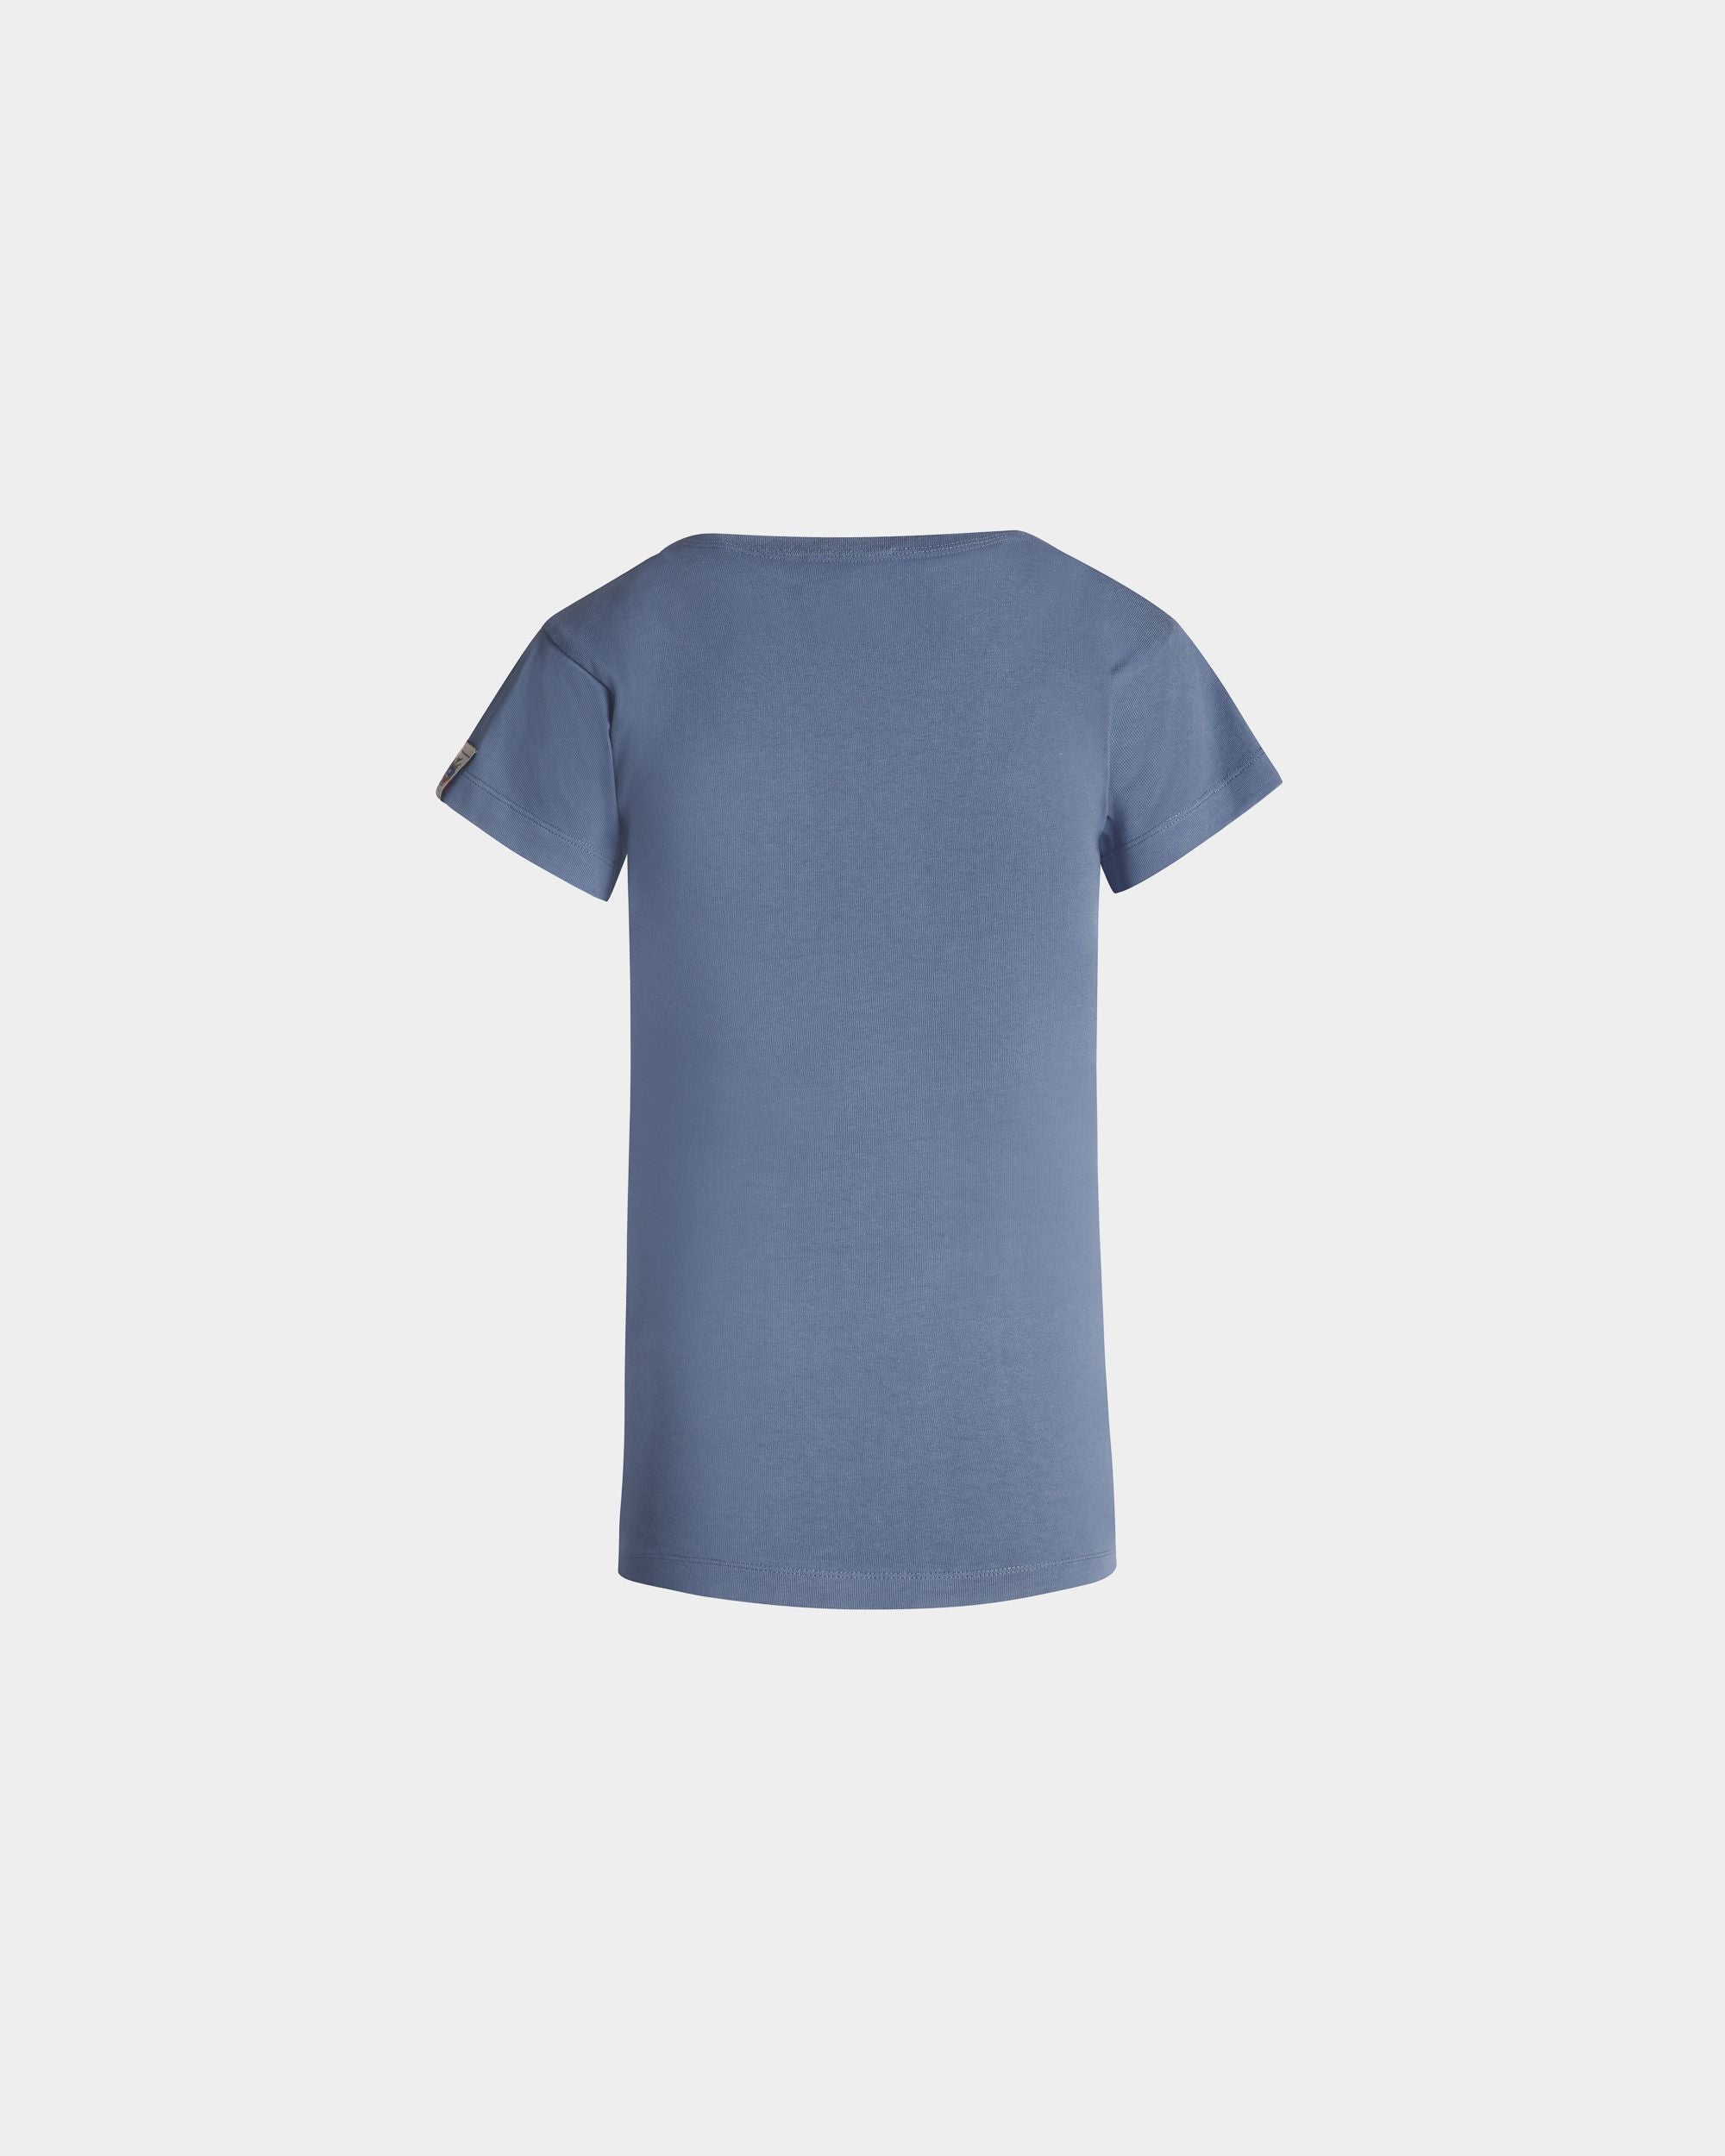 Women's T-Shirt in Light Blue Cotton | Bally | Still Life Back